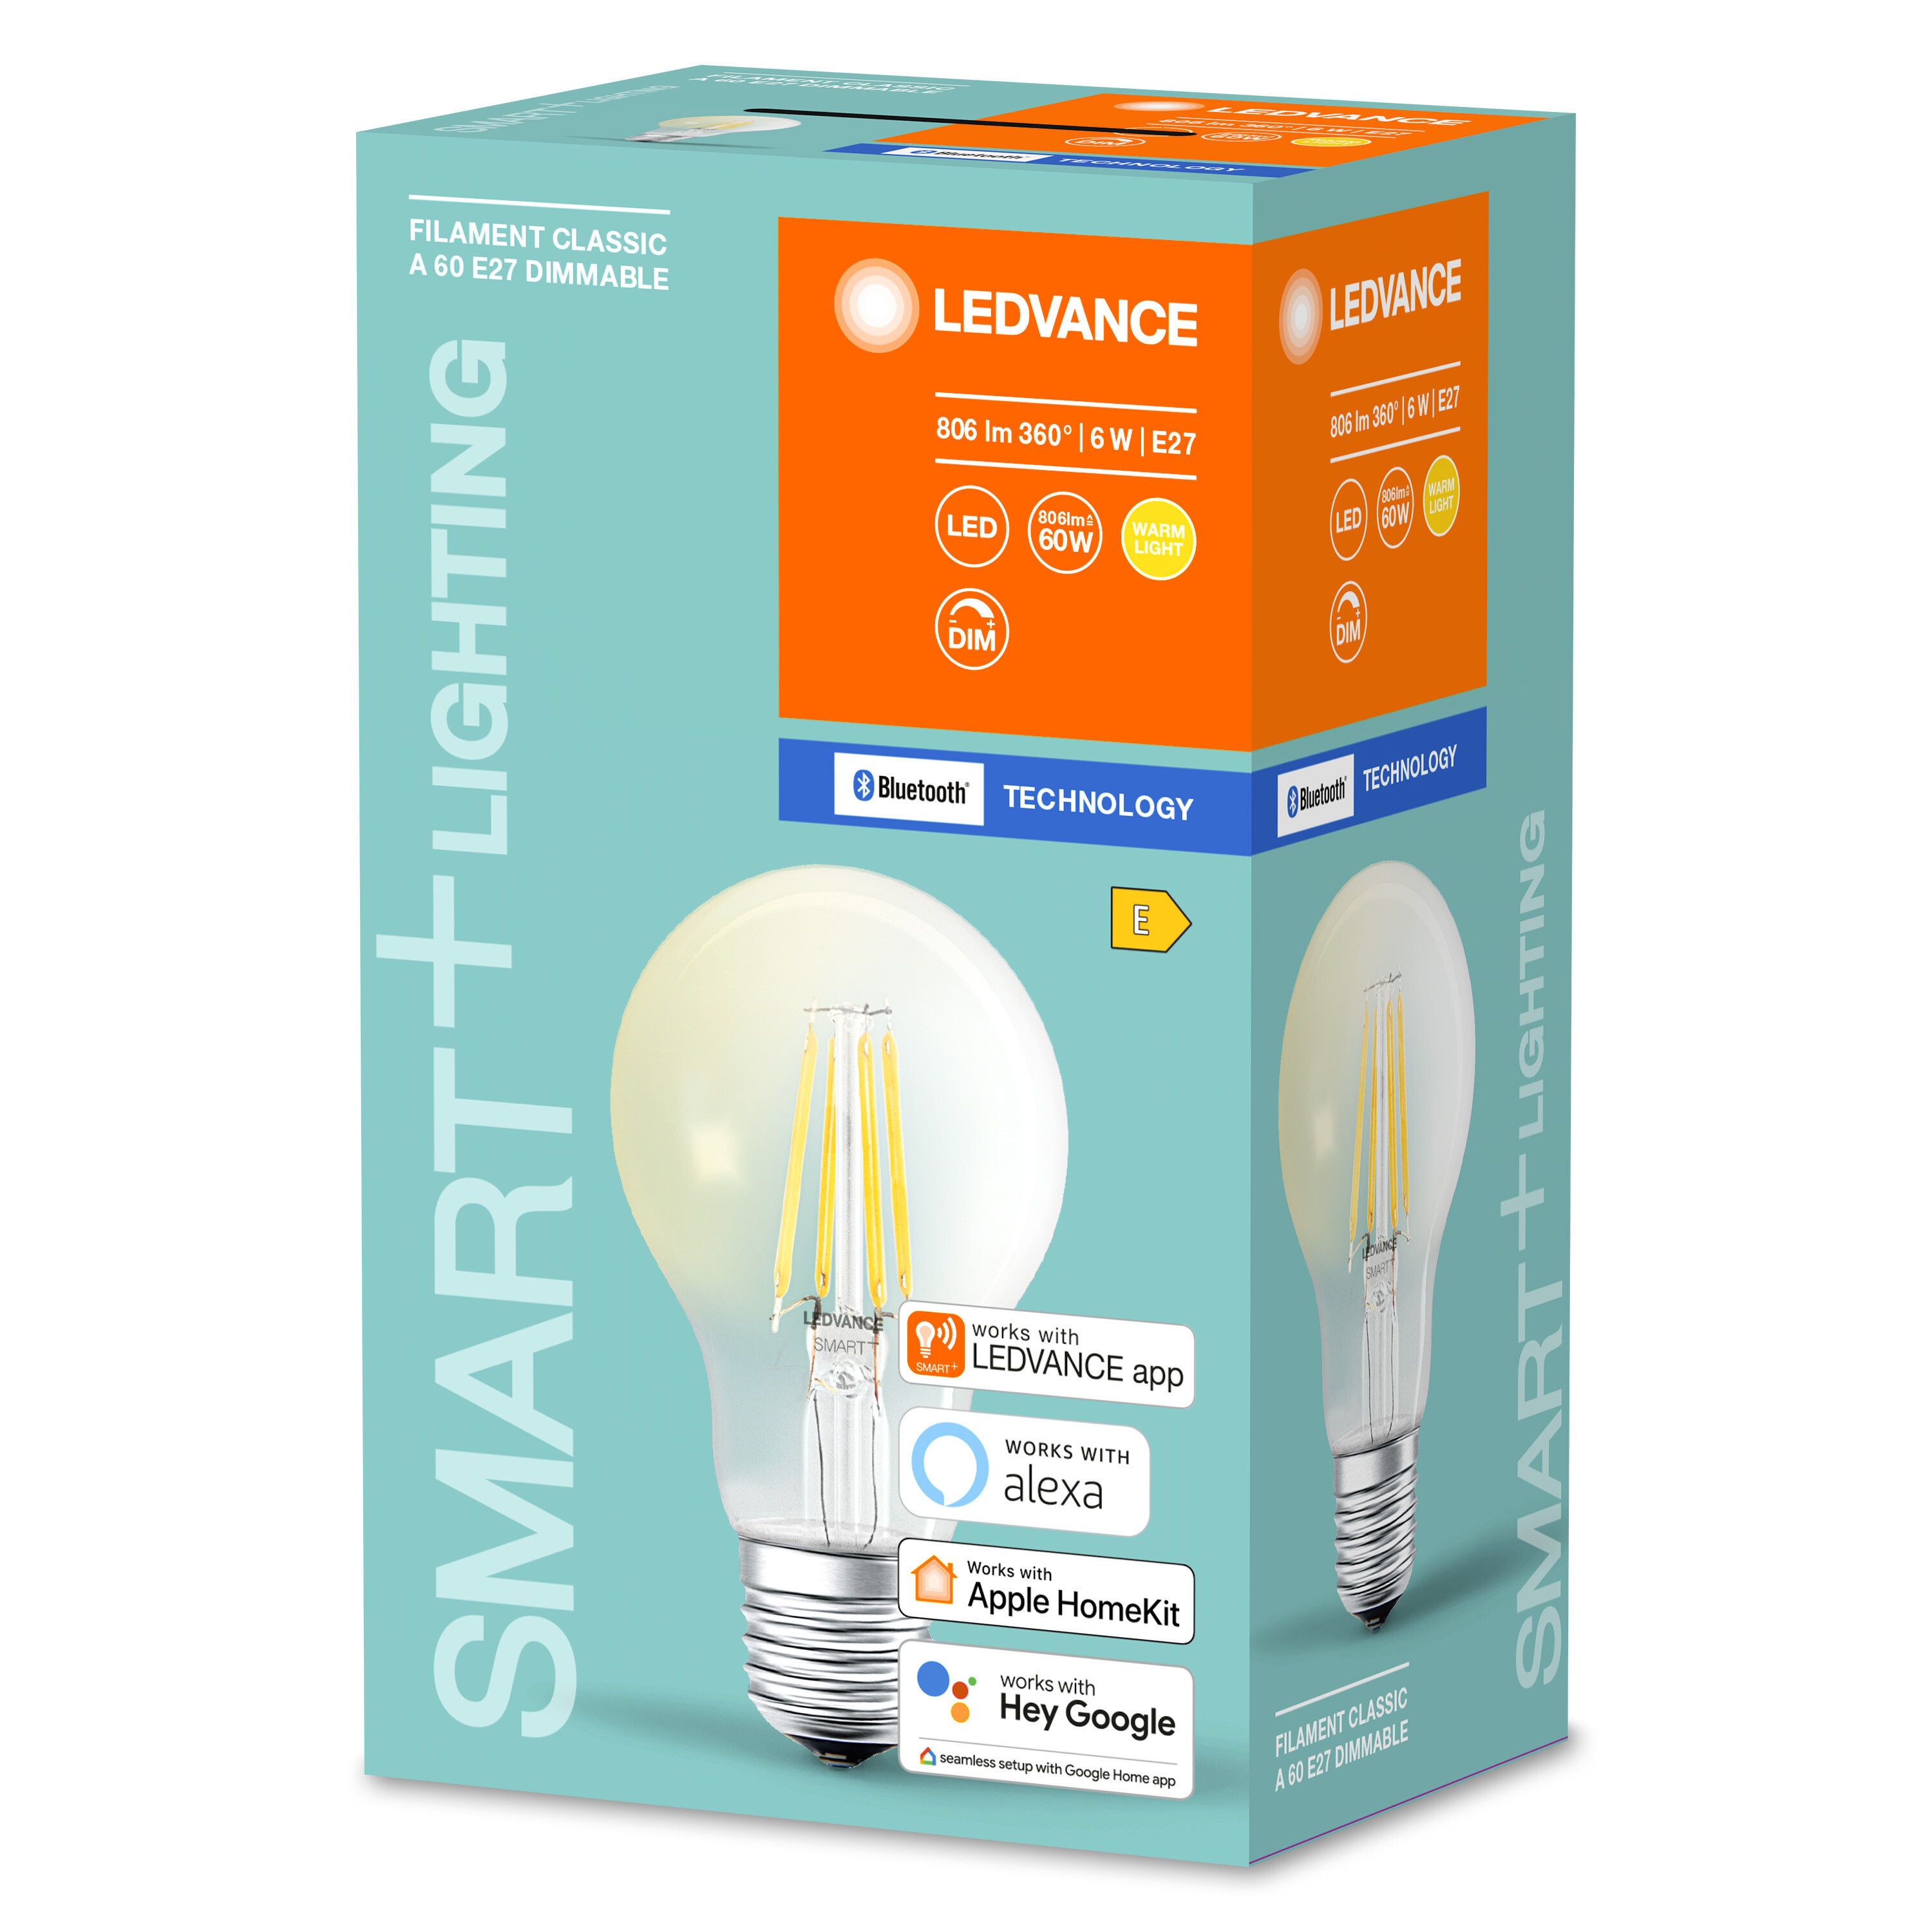 LEDVANCE SMART+ Filament Classic Warmweiß Lampe LED Dimmable